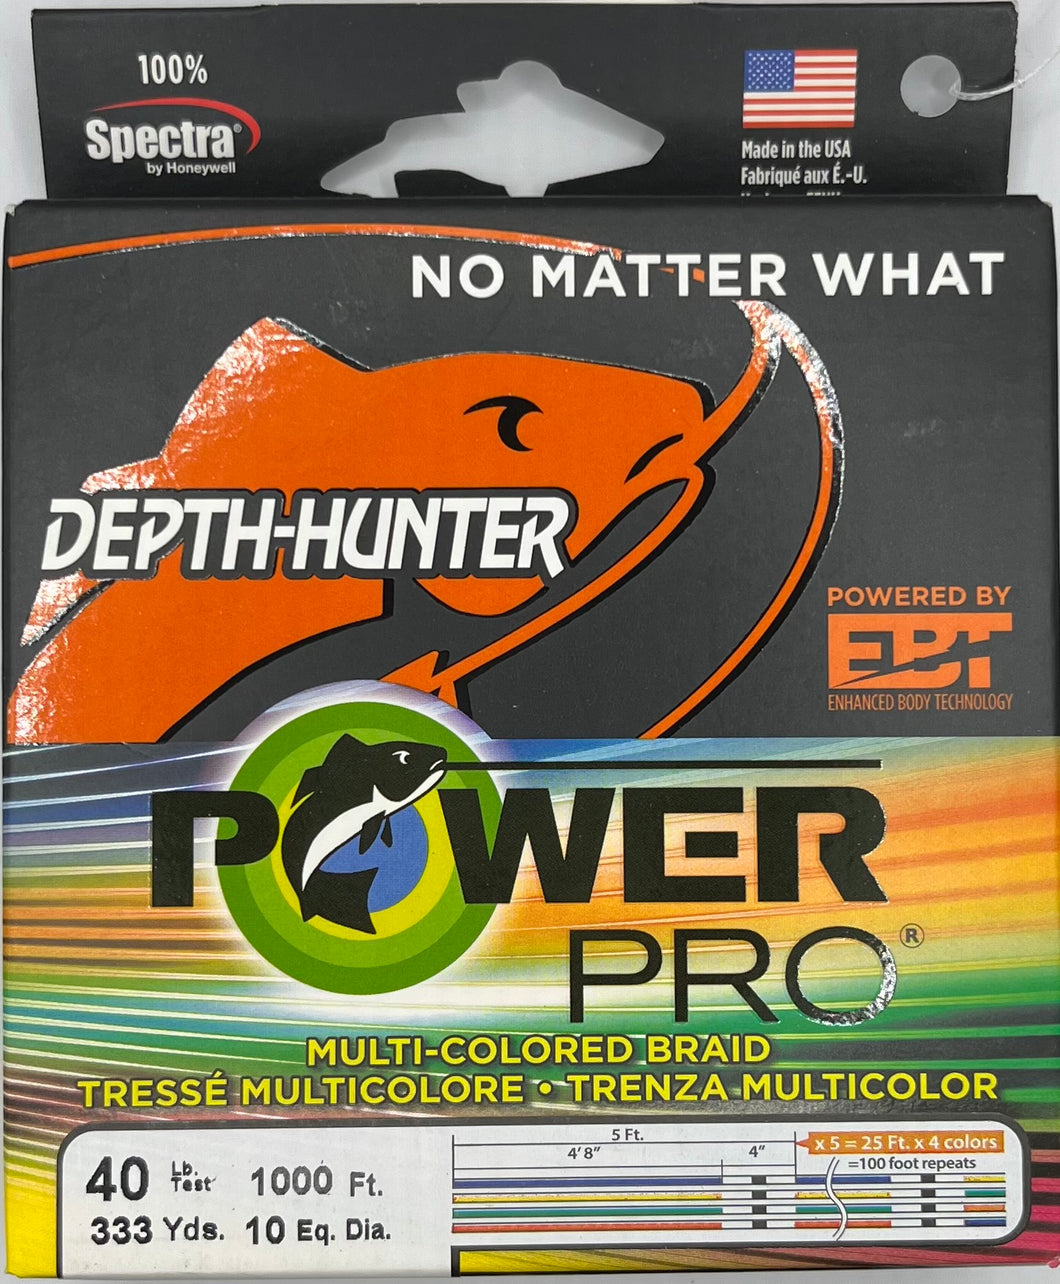 Power Pro Depth-Hunter